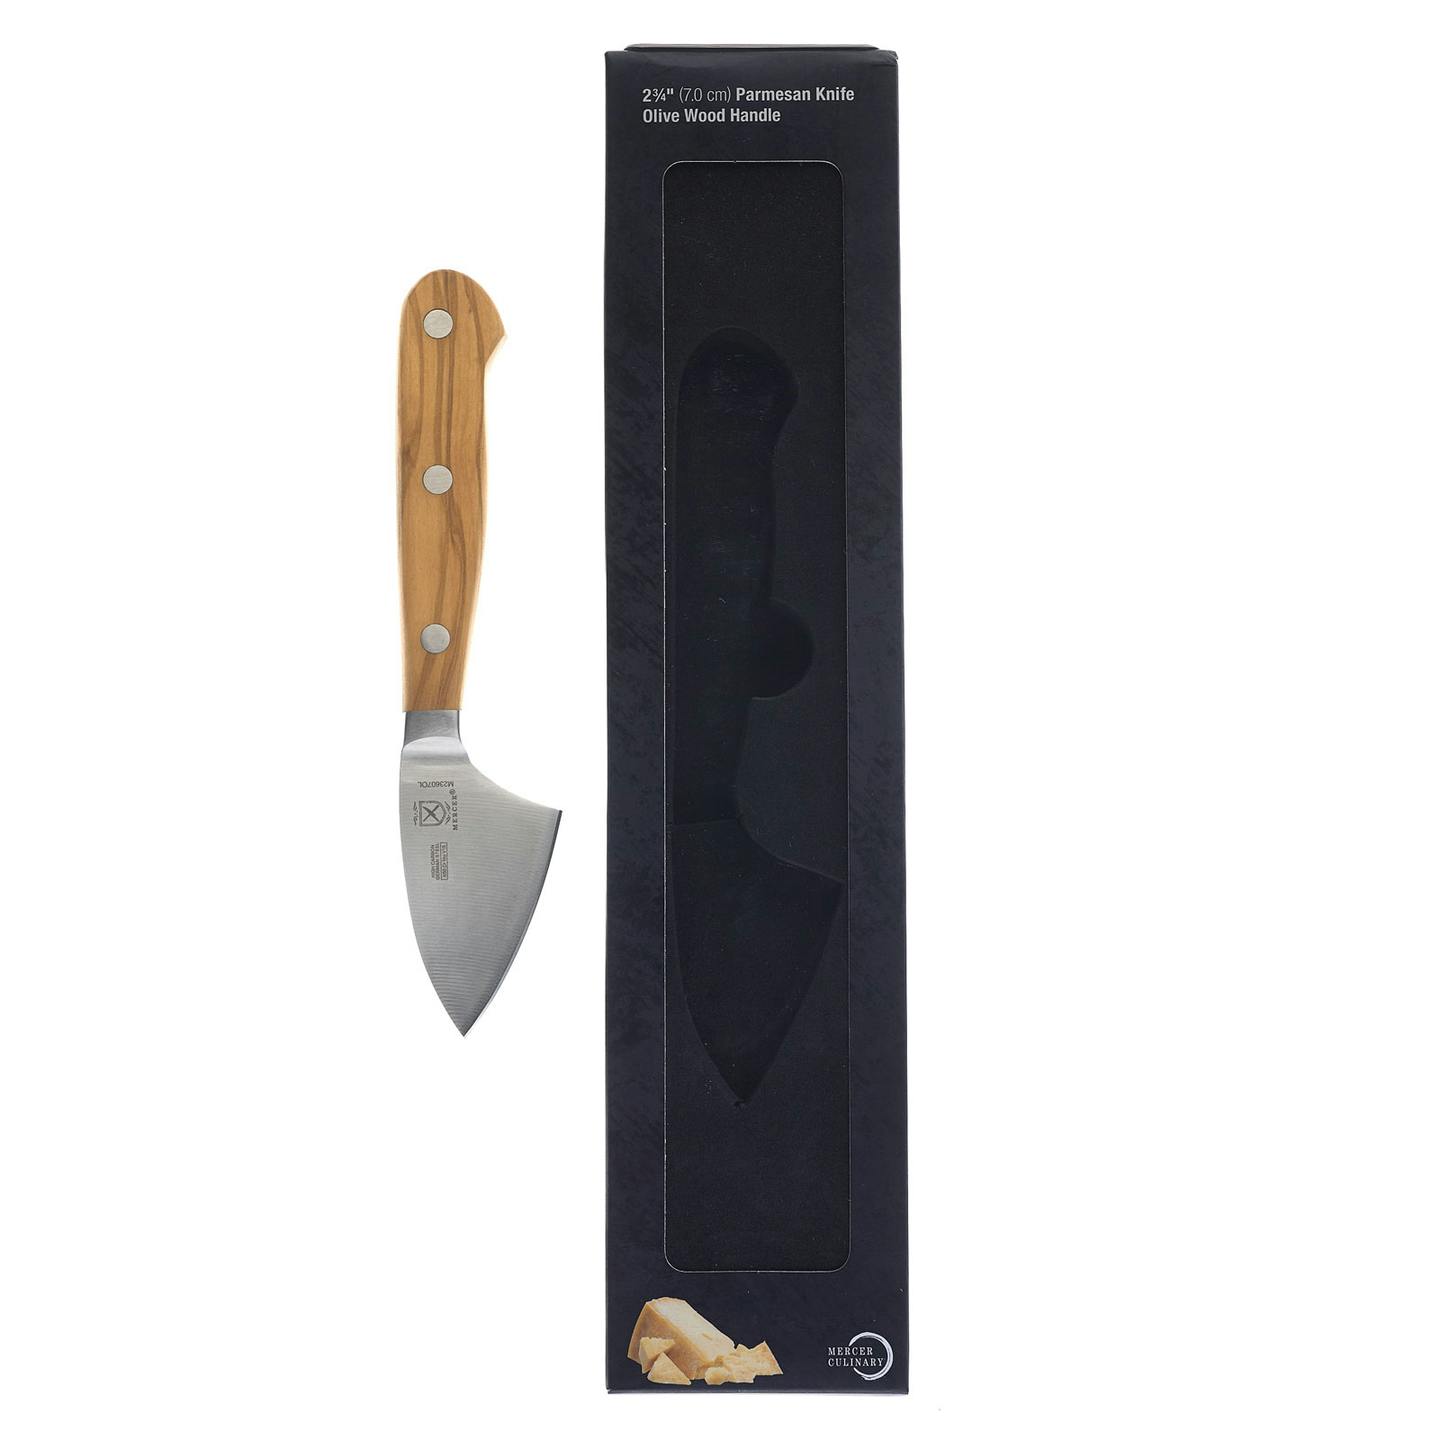 Mercer Culinary Renaissance 2 3/4" Parmesan Knife, Olive Wood Handle